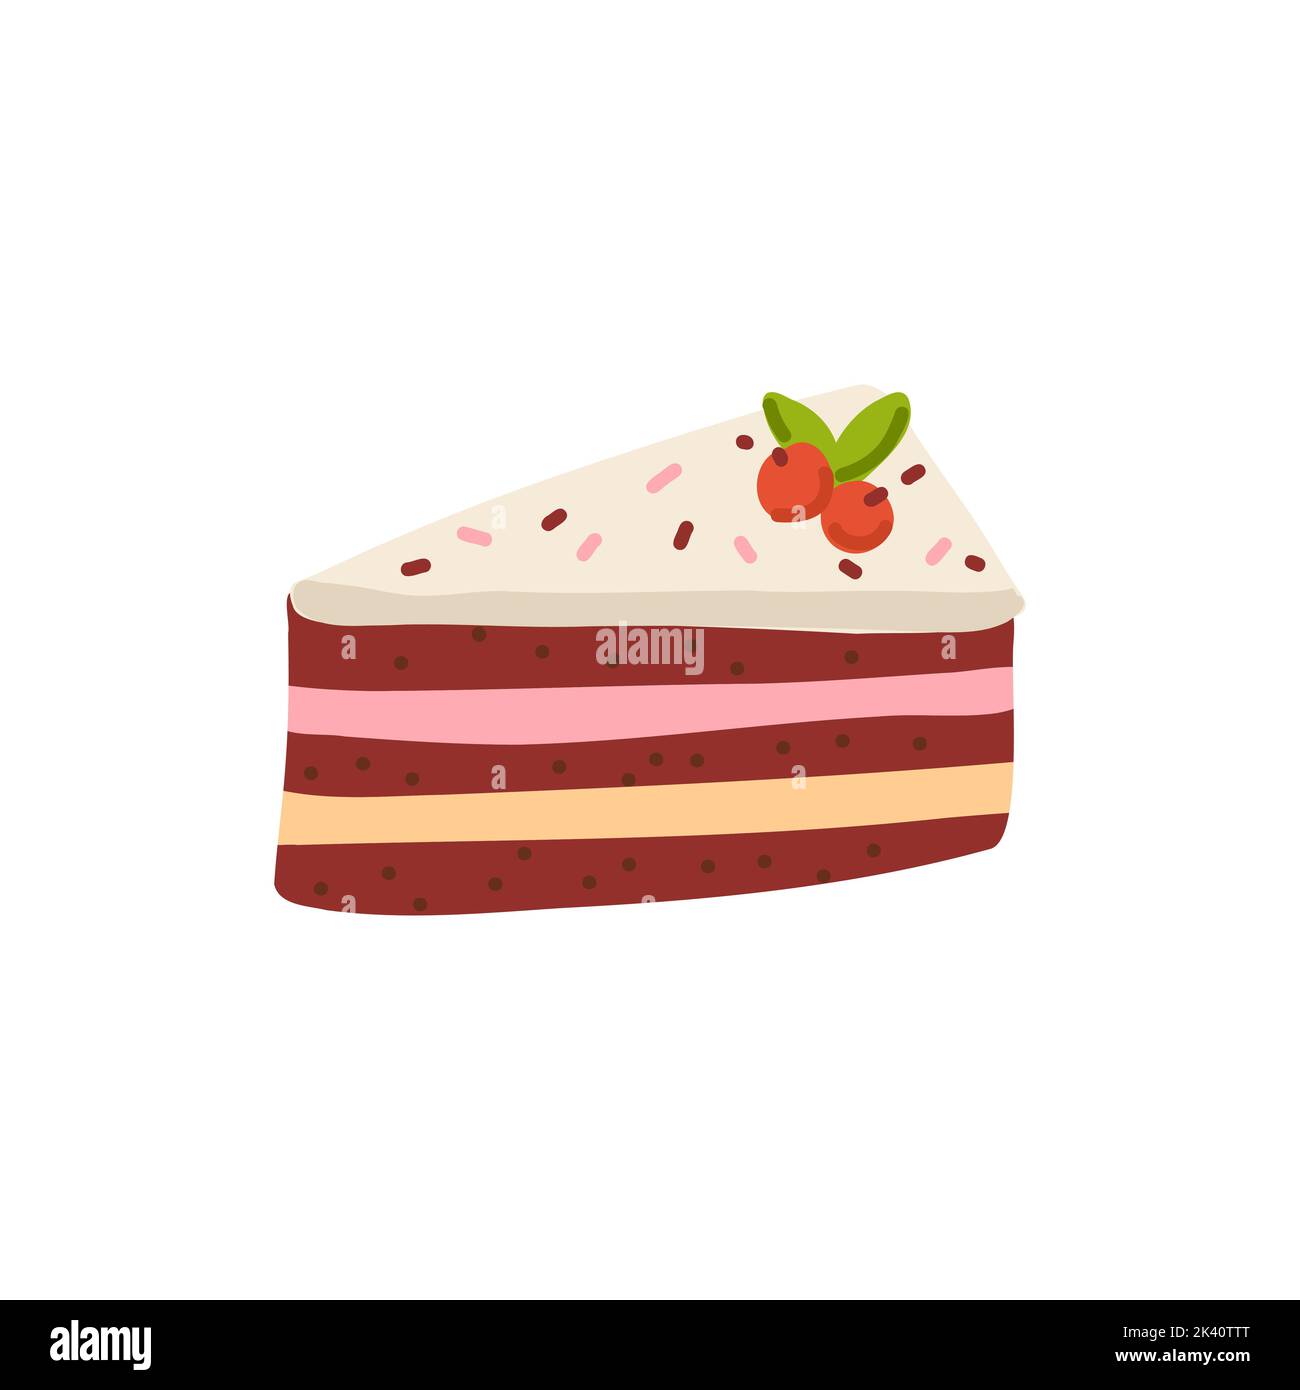 cartoon doodle cake slice - Stock Image - Everypixel